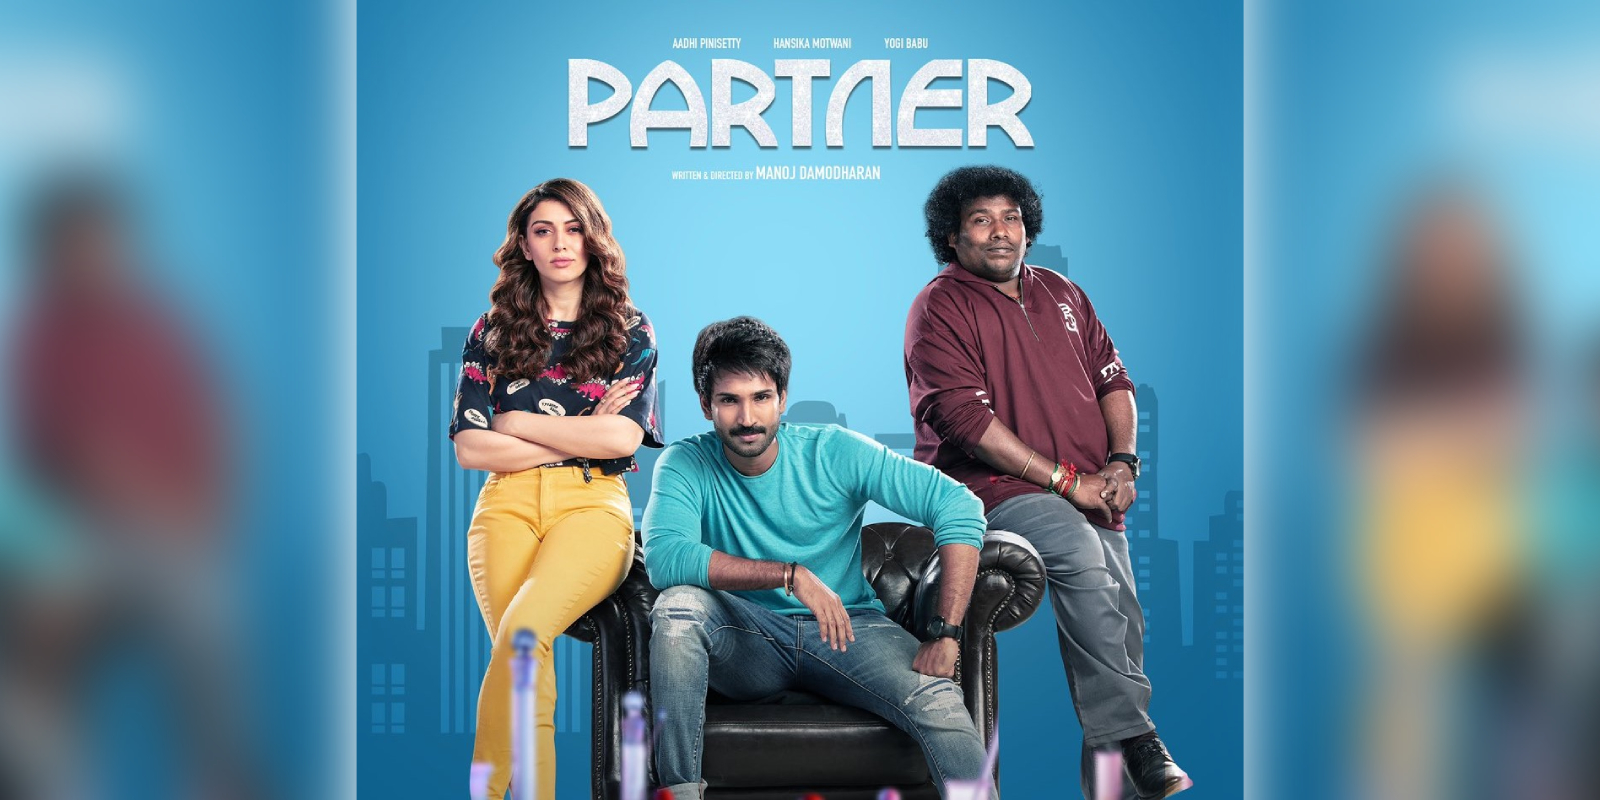 partner movie review tamil